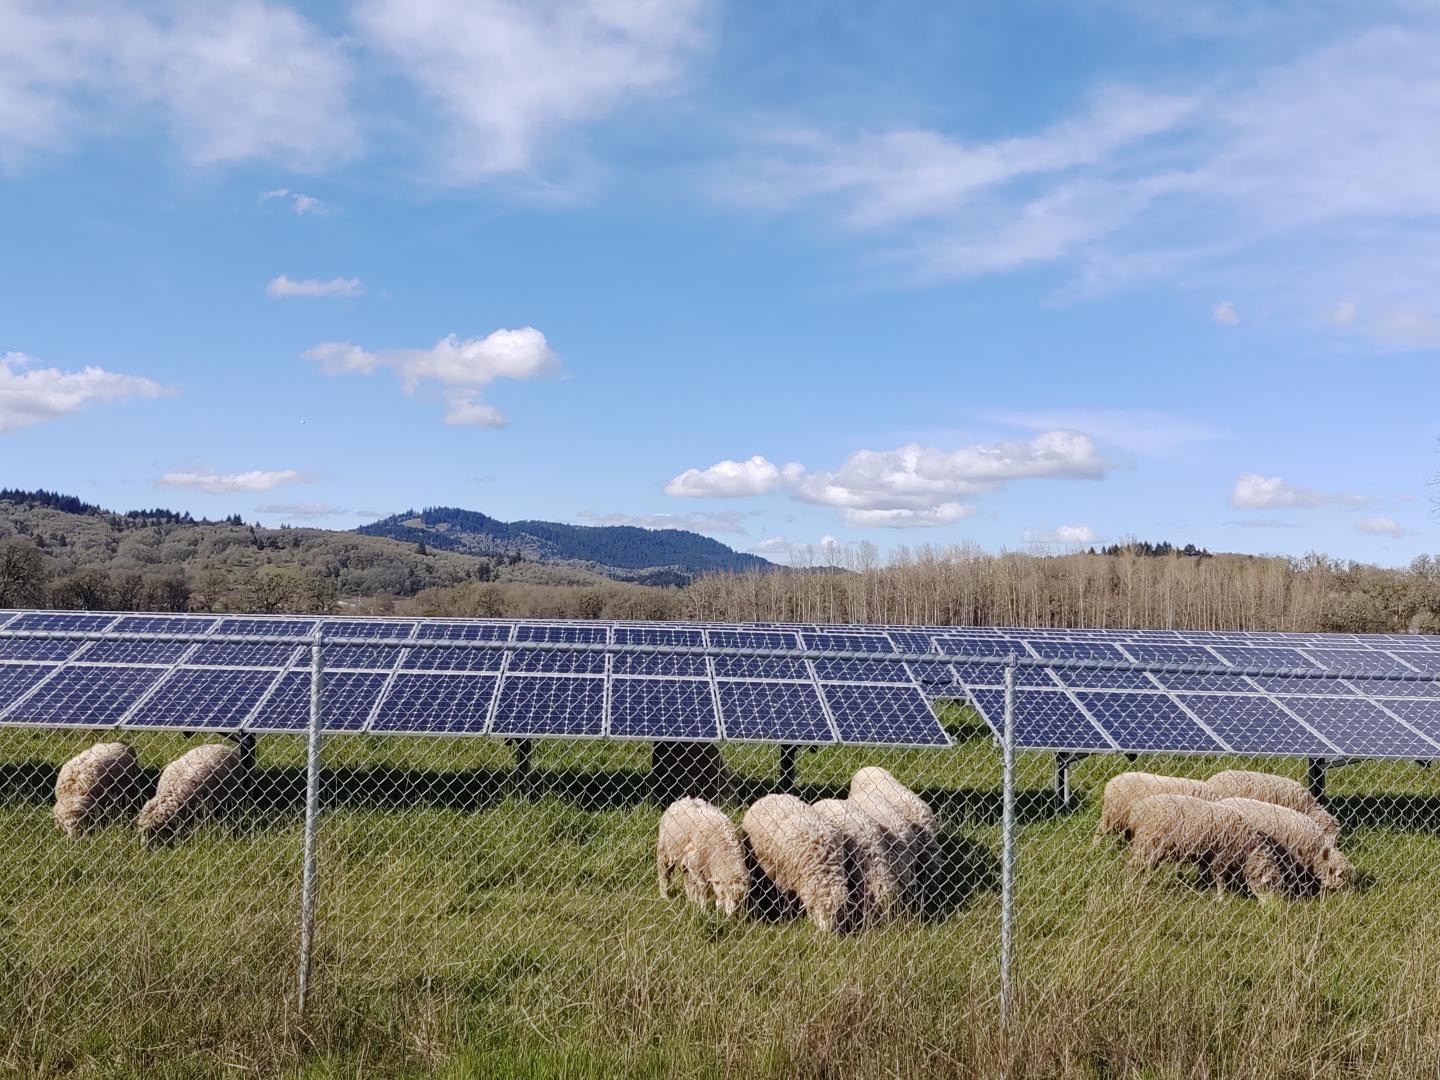 Sheep and solar panels